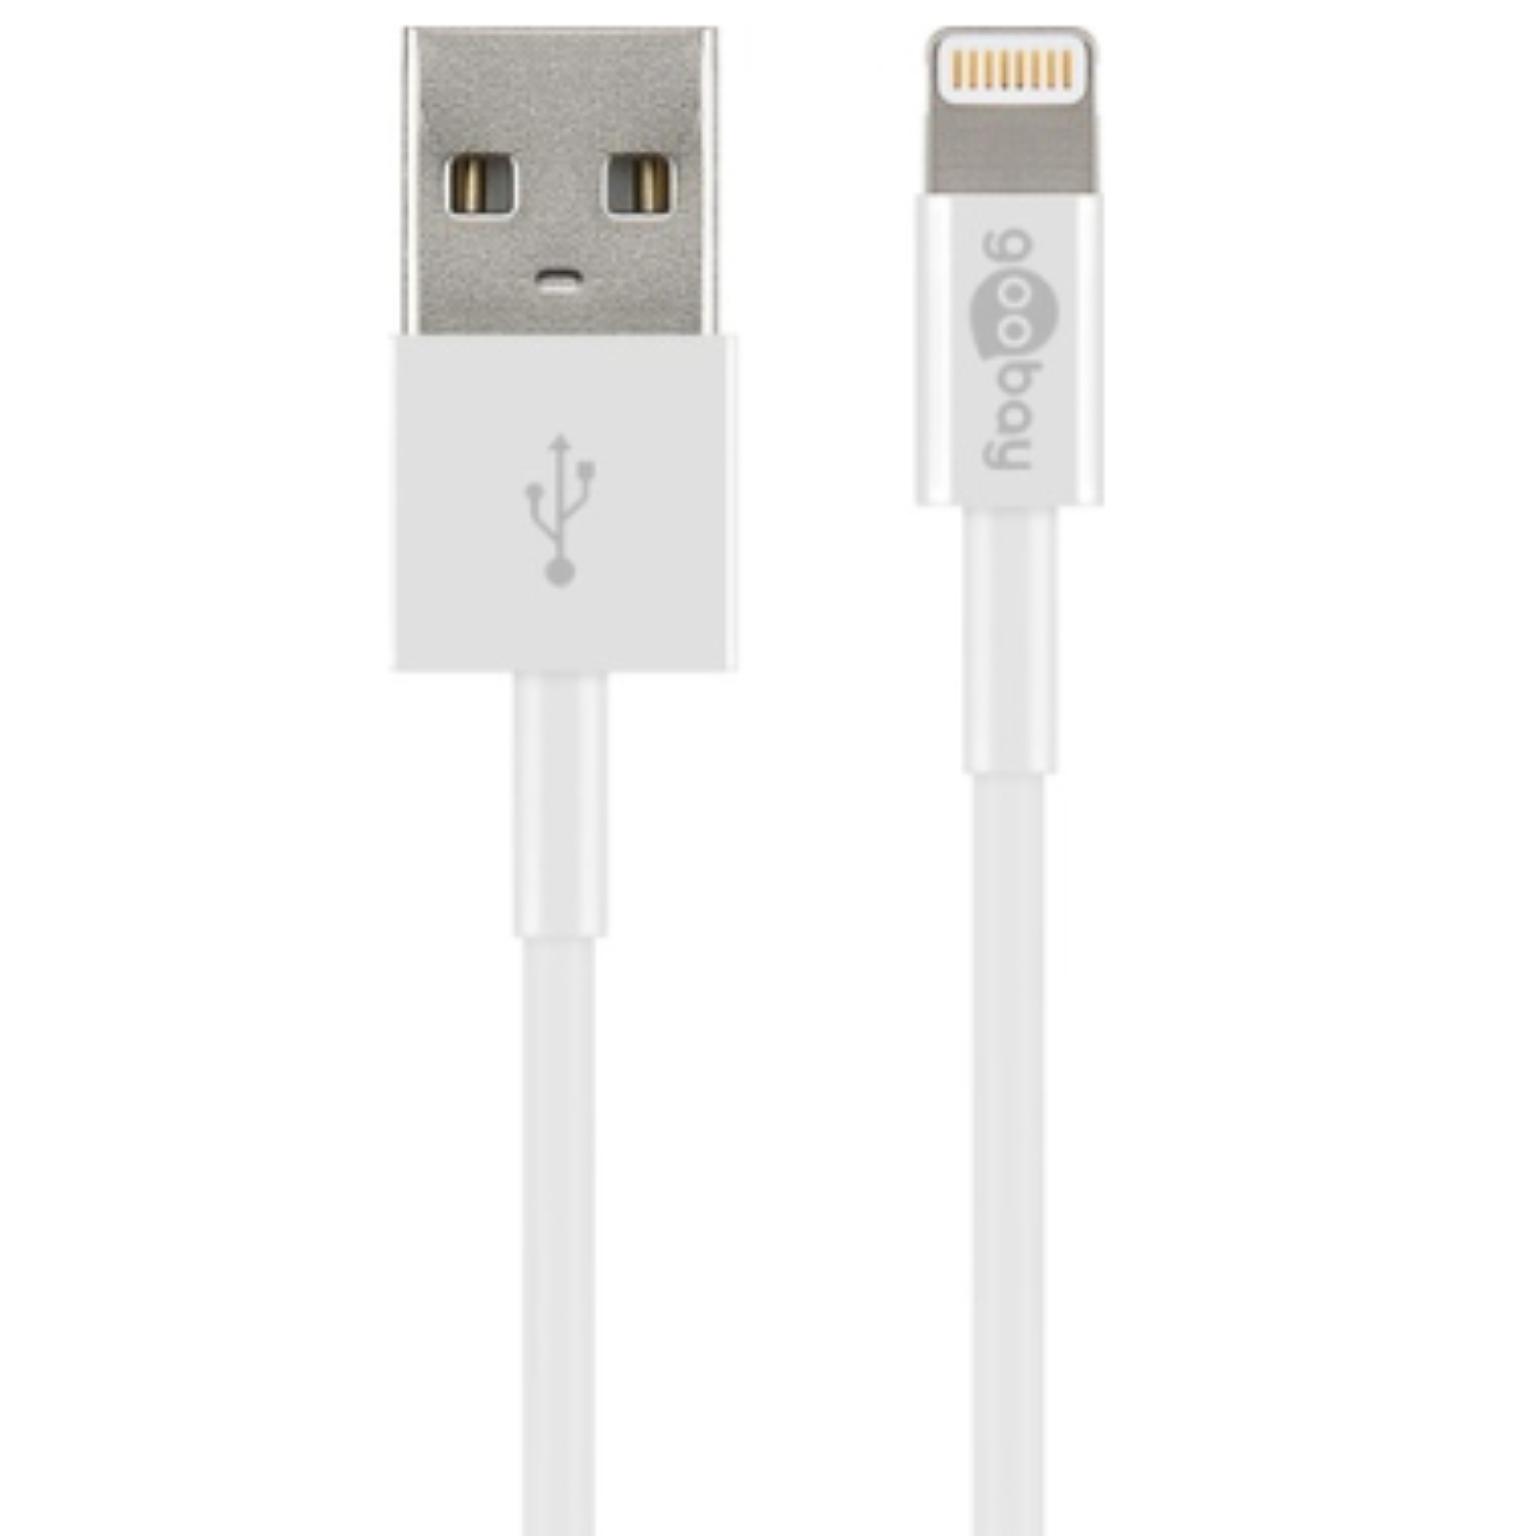 club Bevestigen aan Nominaal Lightning naar USB Kabel - Lightning naar USB Kabel Connector 1: Lightning  Male Connector 2: USB A 2.0 Male Lengte: 1 Meter